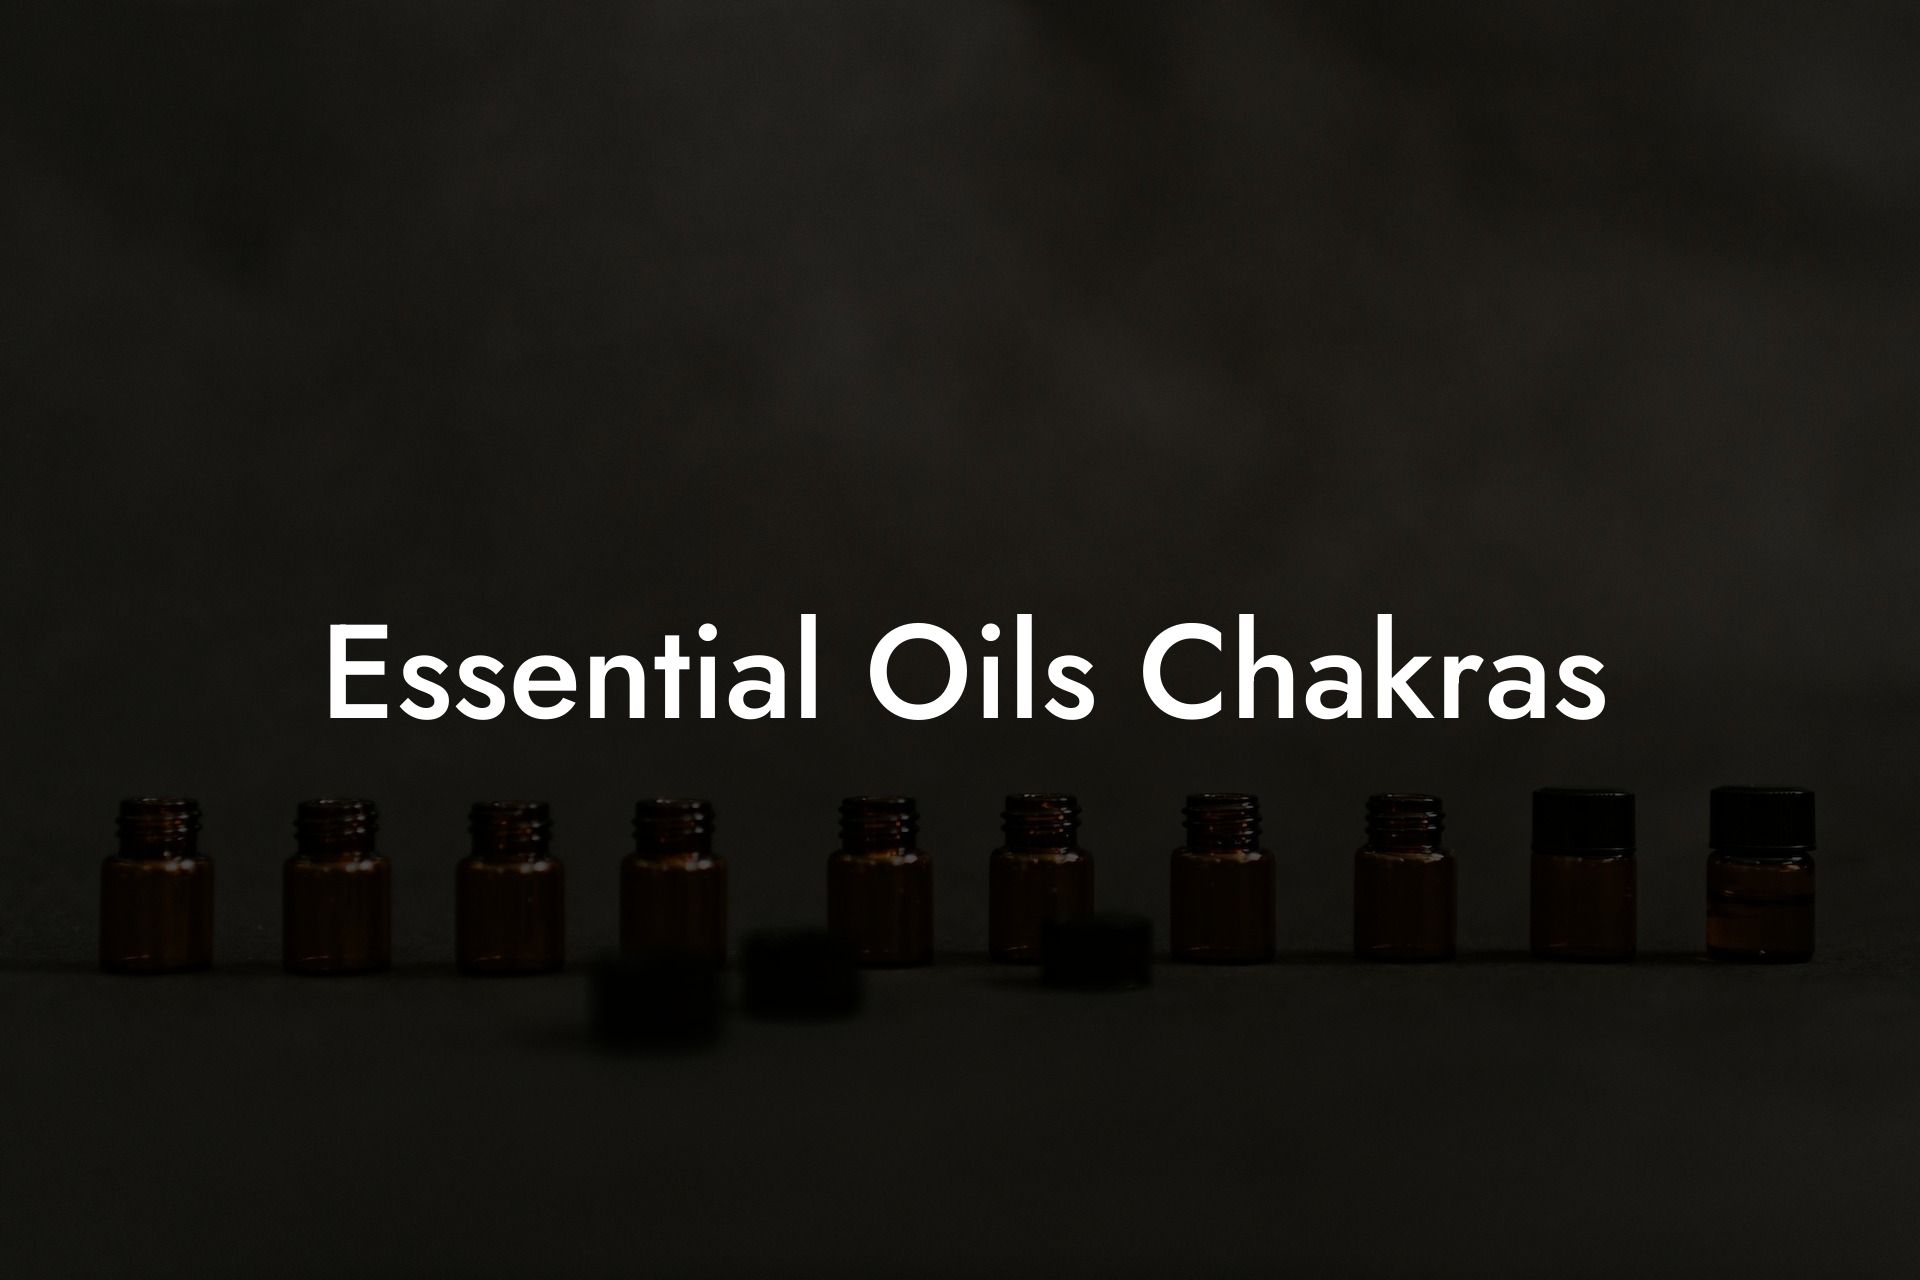 Essential Oils Chakras